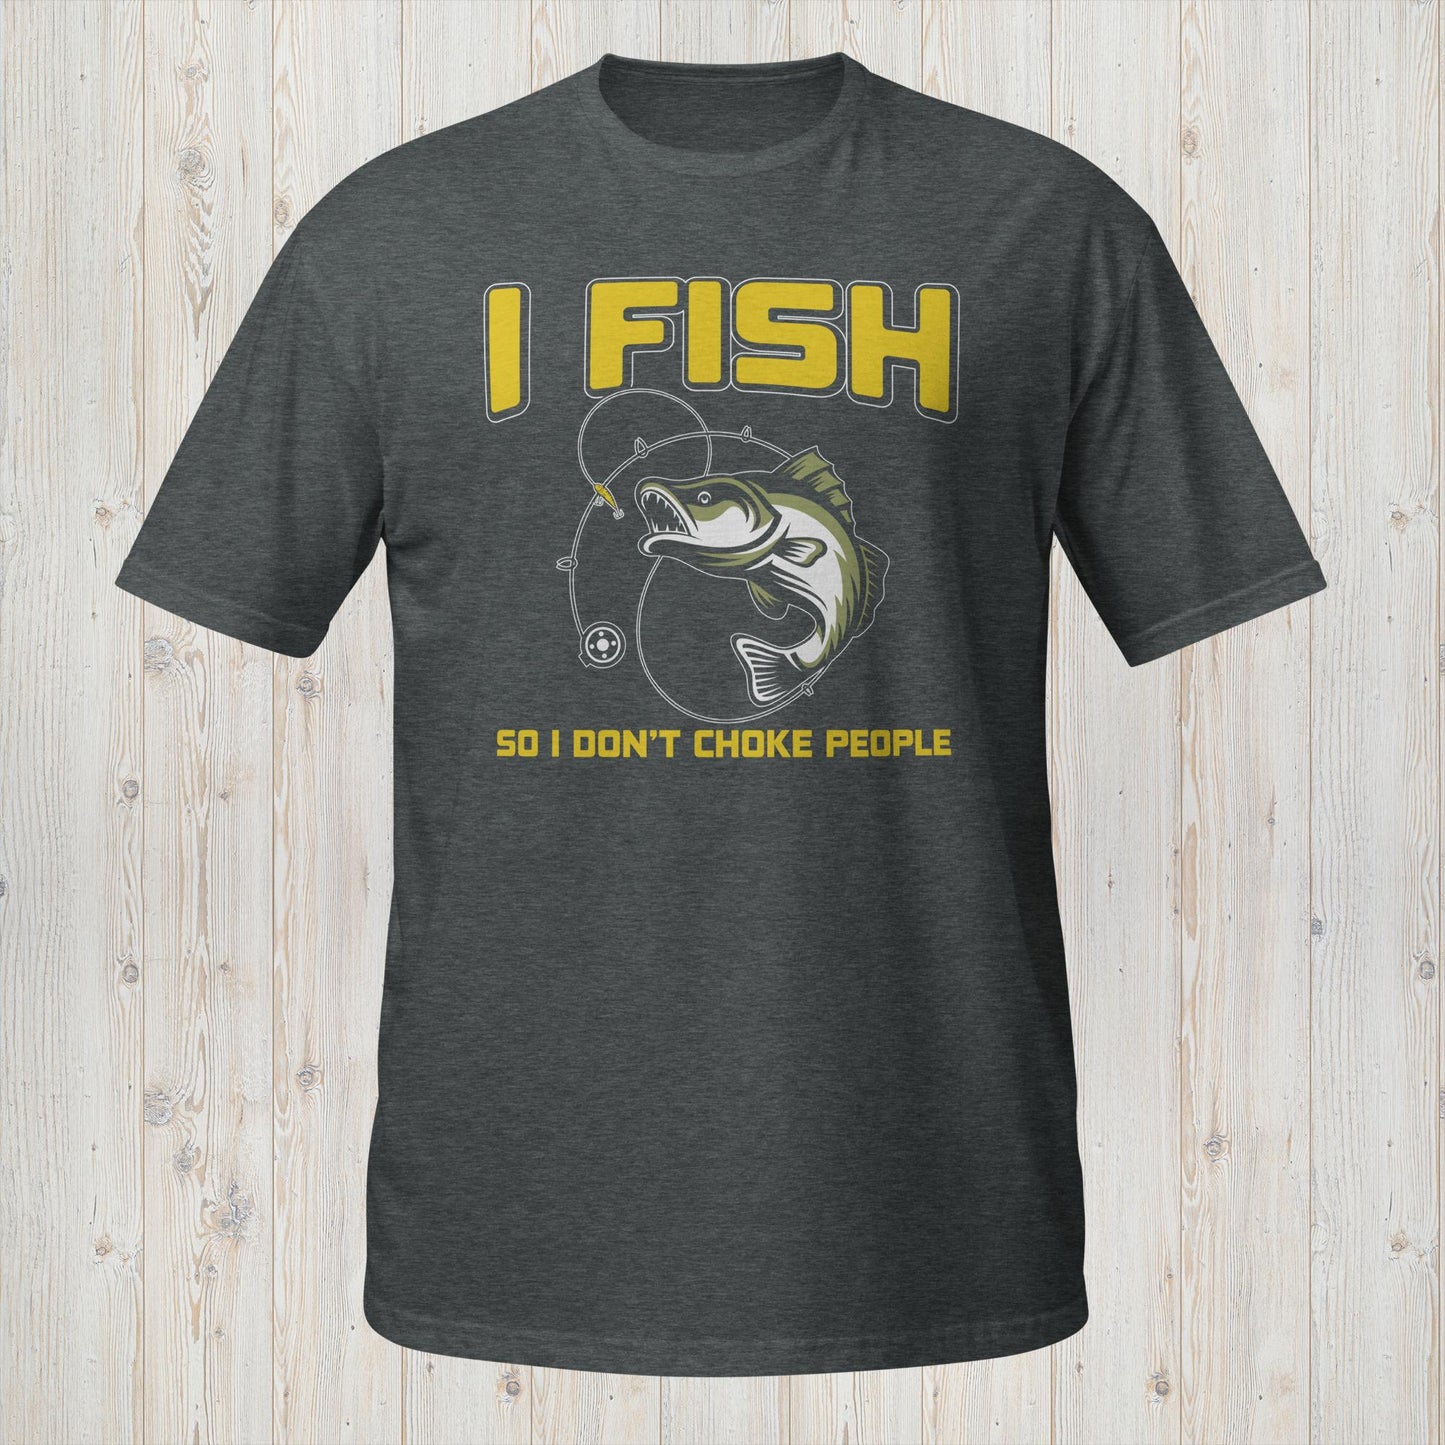 I Fish So I Don't Choke People Tee - Humorous Fishing Statement Shirt